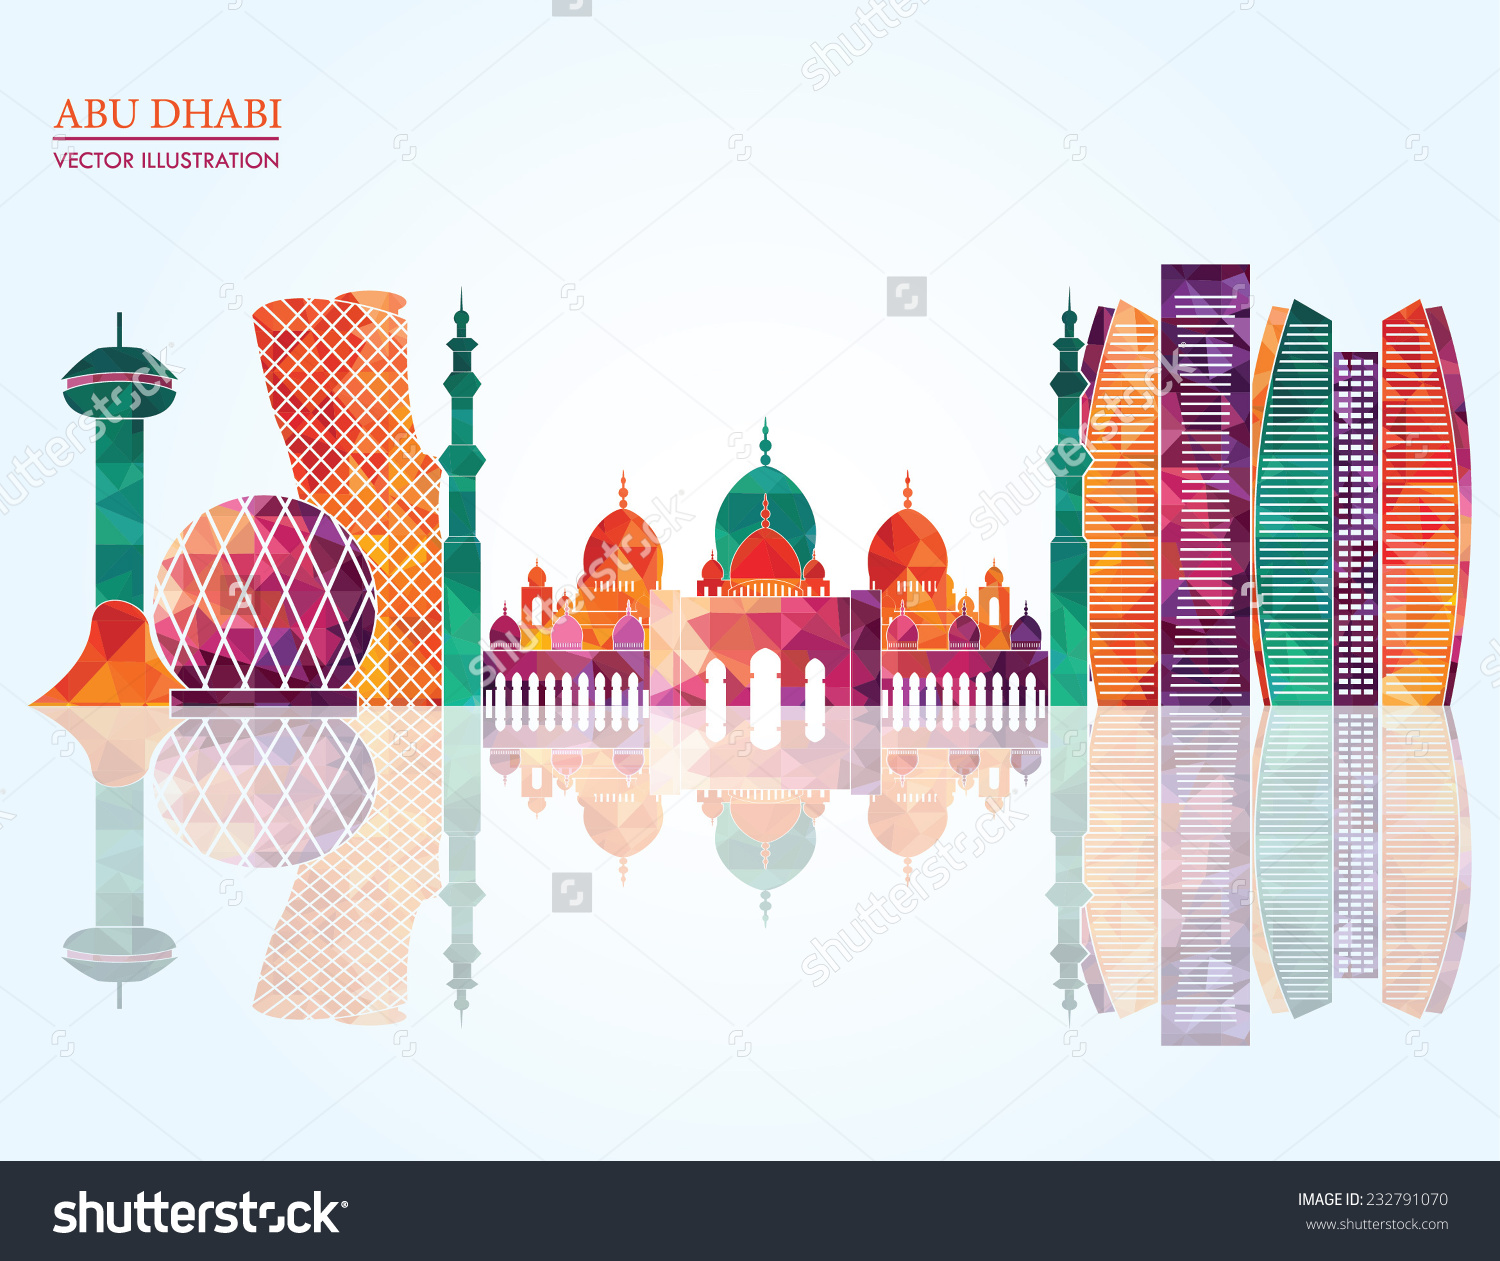 Abu Dhabi Skyline Vector Illustration Stock Vector 232791070.